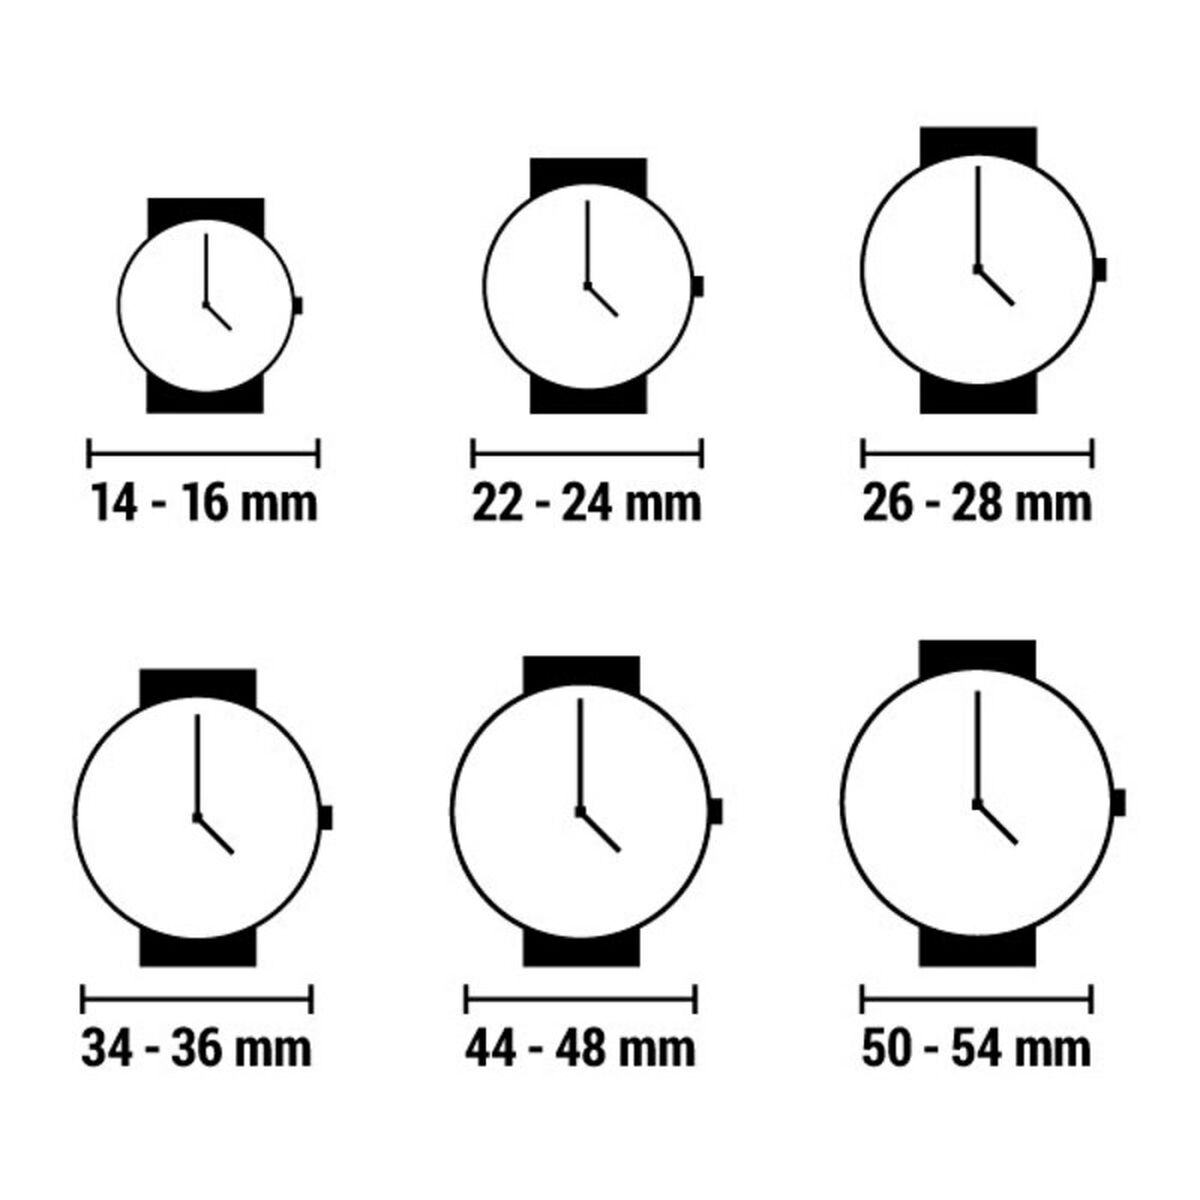 Horloge Heren Guess W0657G1 (Ø 45 mm)